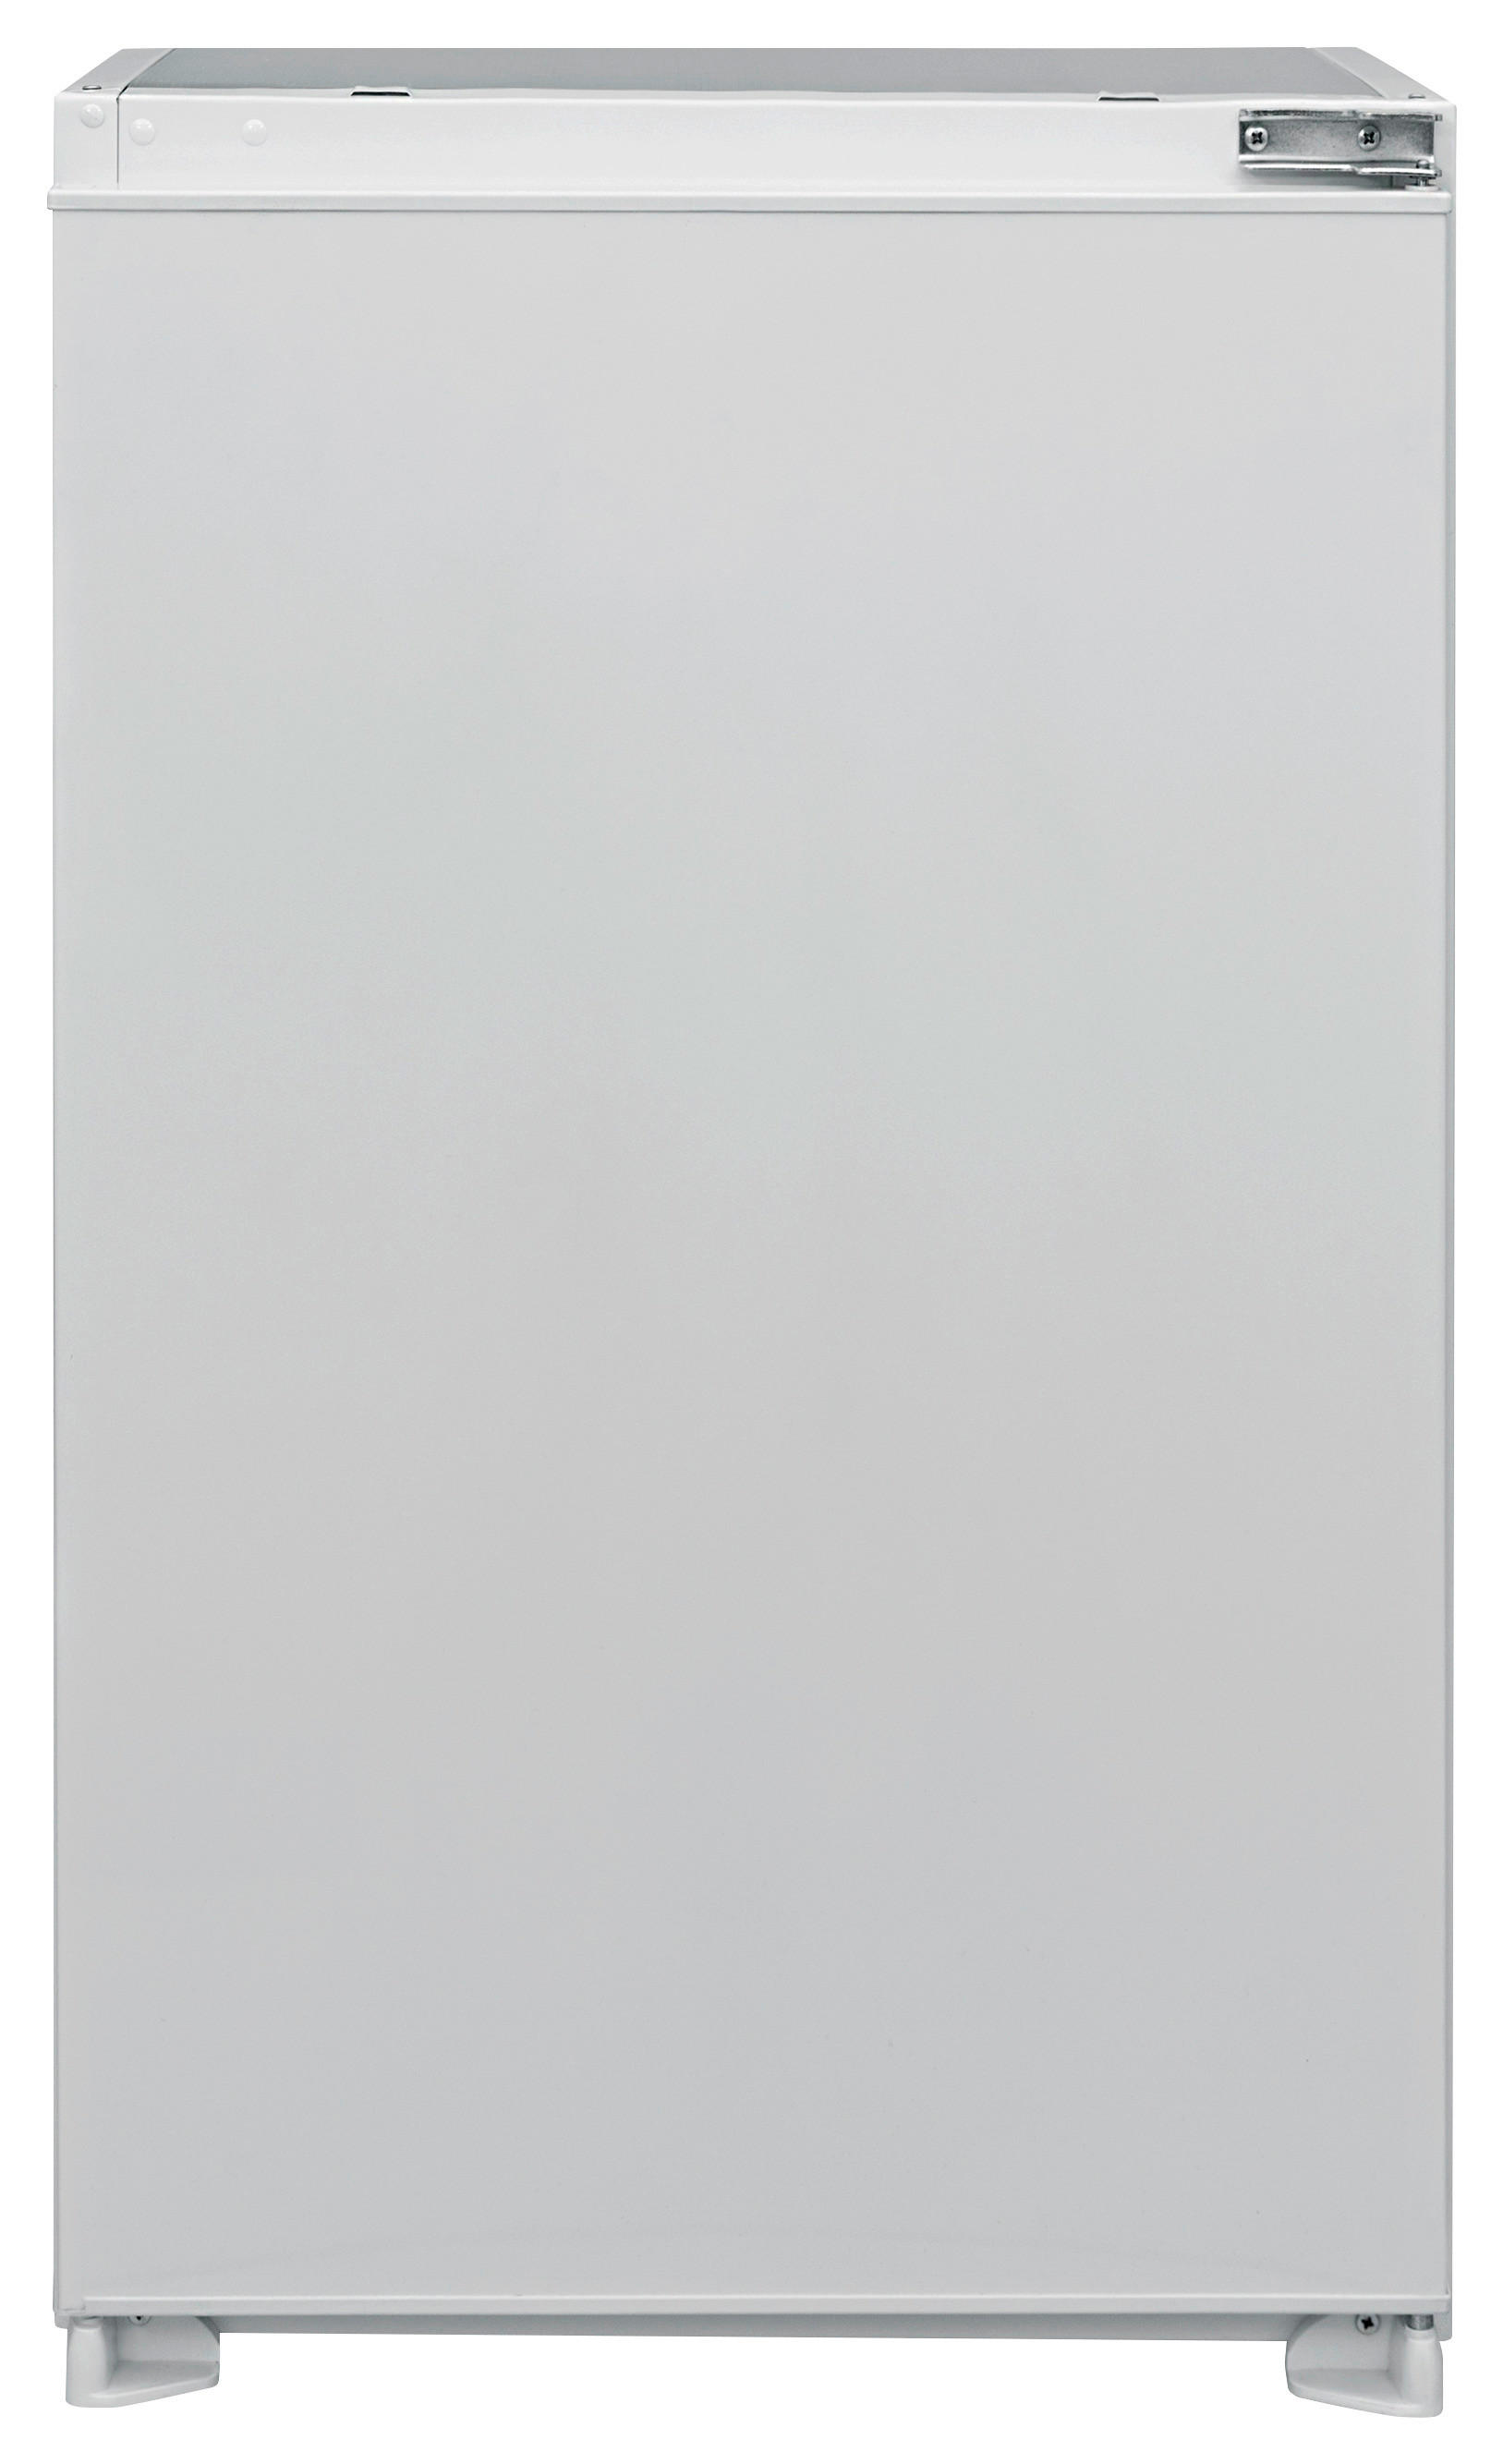 KÜCHENBLOCK  310 cm  Grau, Weiß, Edelstahlfarben E-Geräte, Spüle  - Edelstahlfarben/Weiß, MODERN (310cm) - MID.YOU